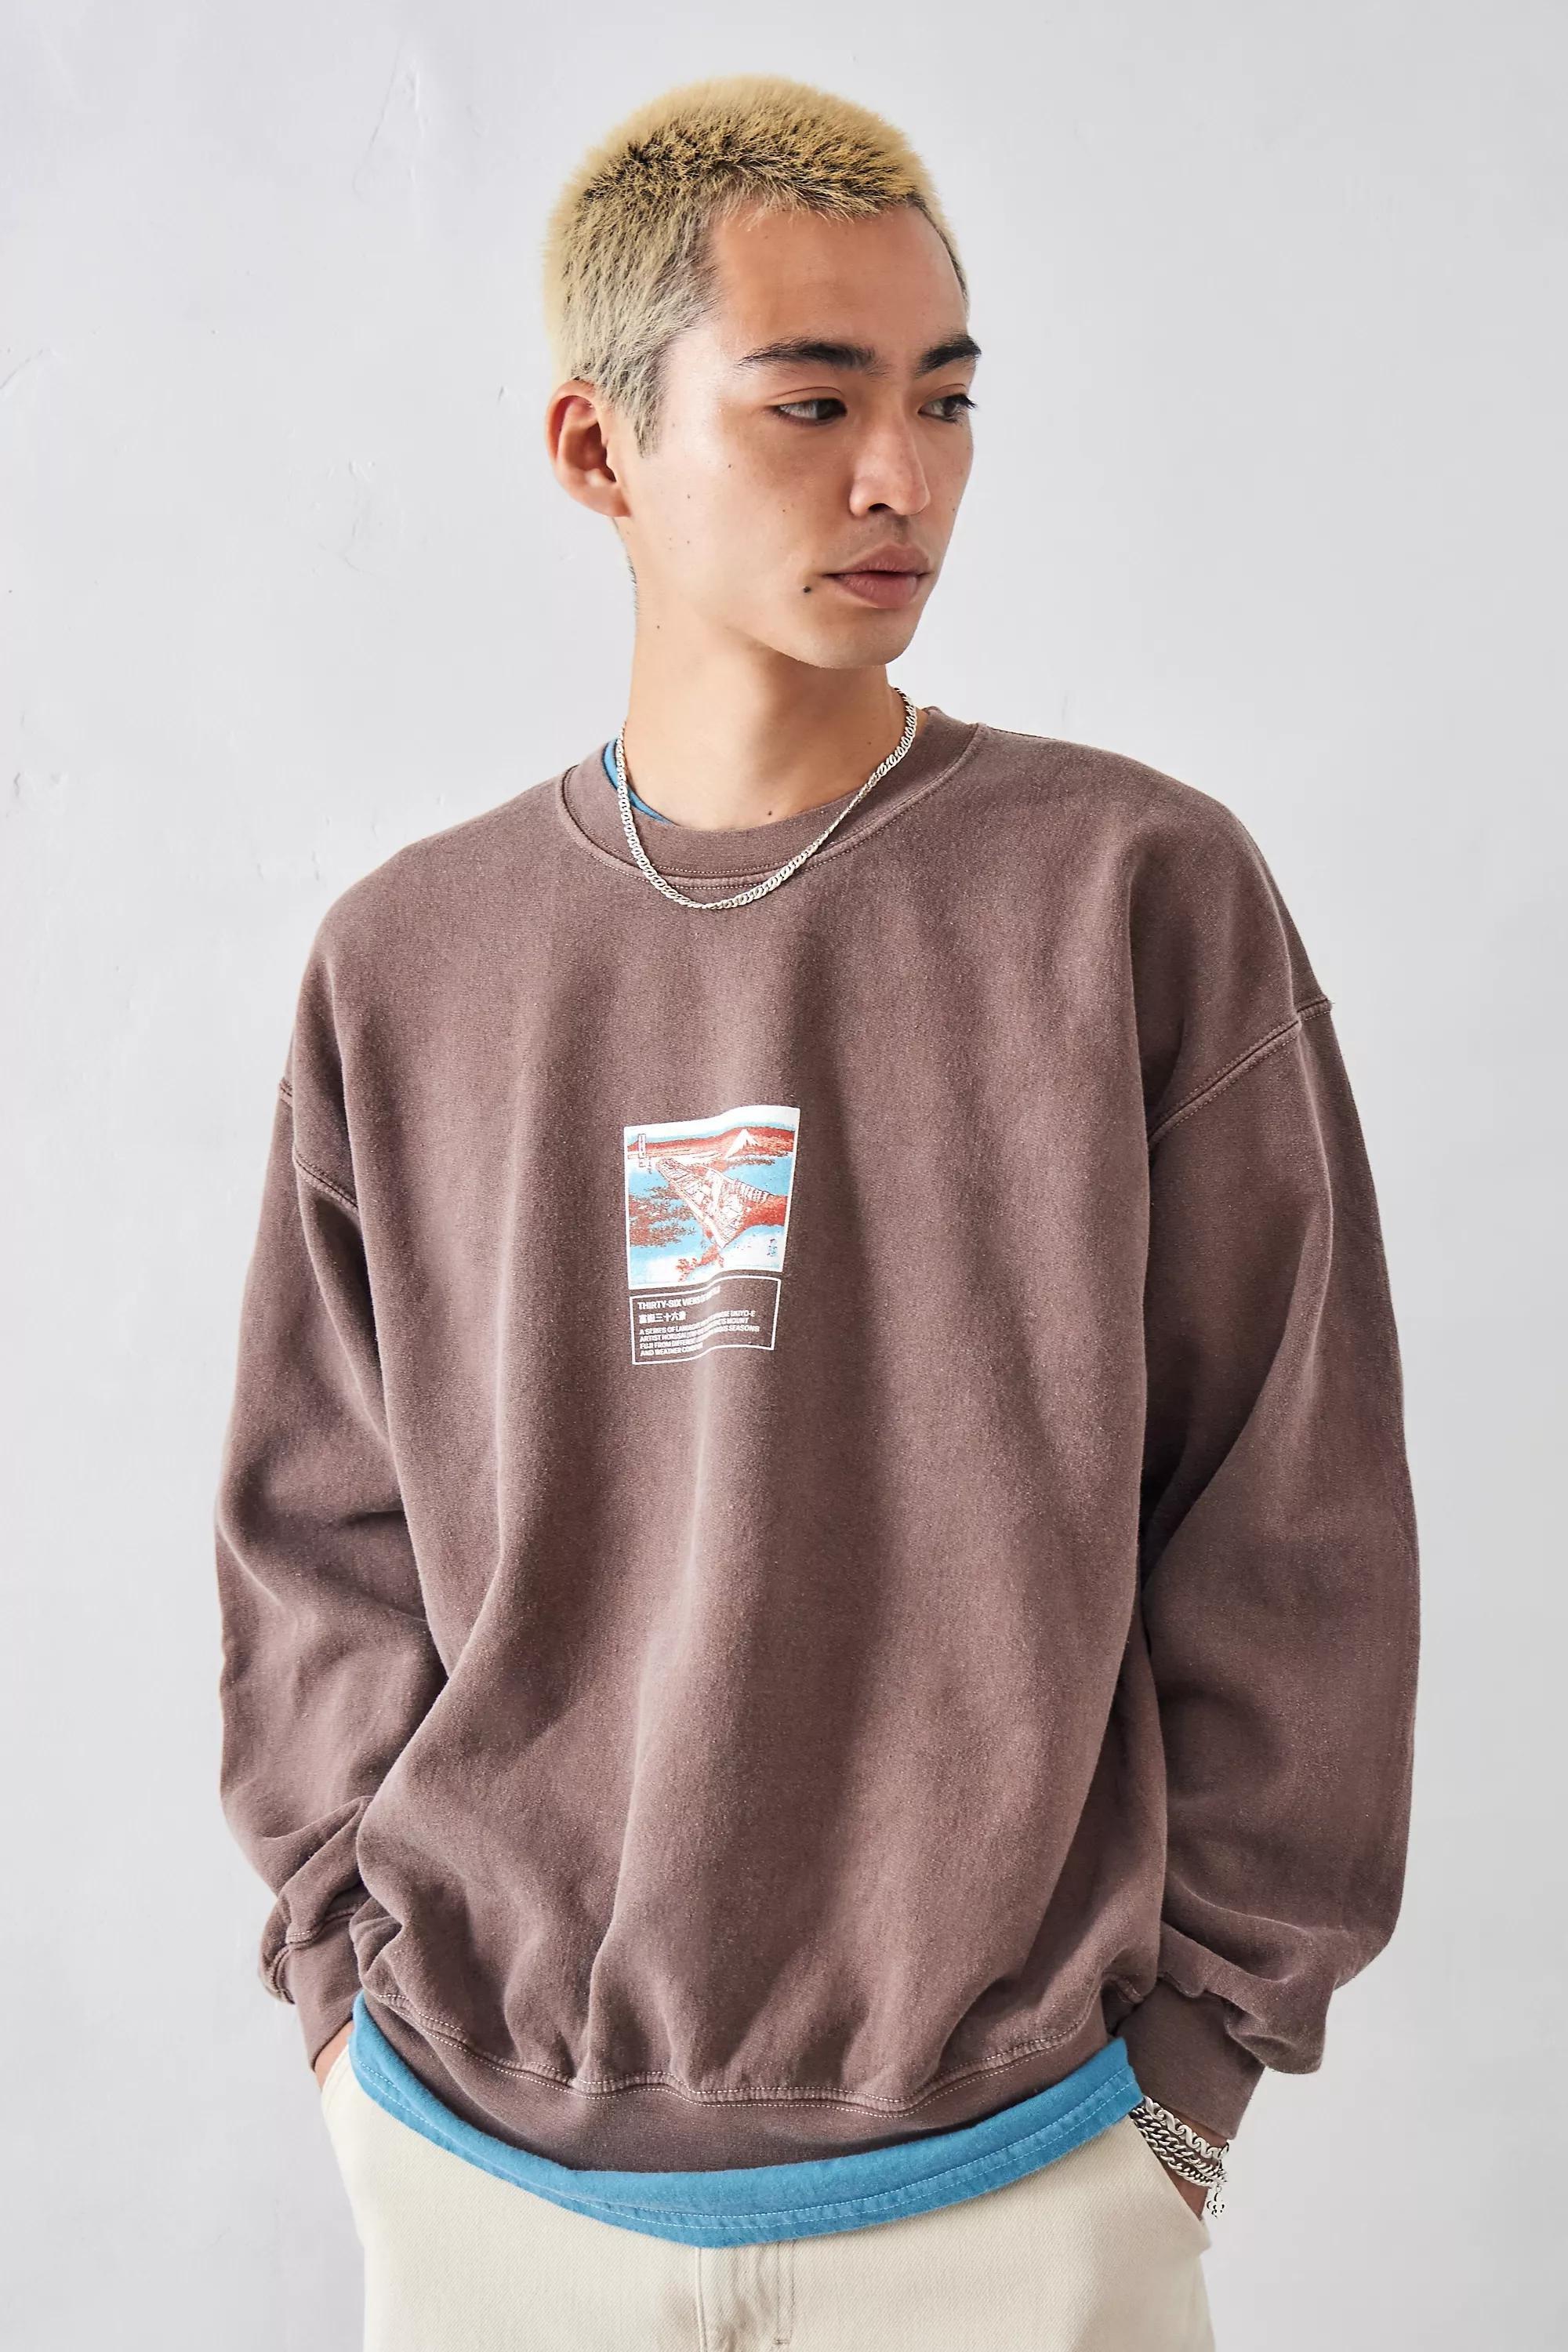 Urban Outfitters - Bronze Rust Hokusai Poster Sweatshirt